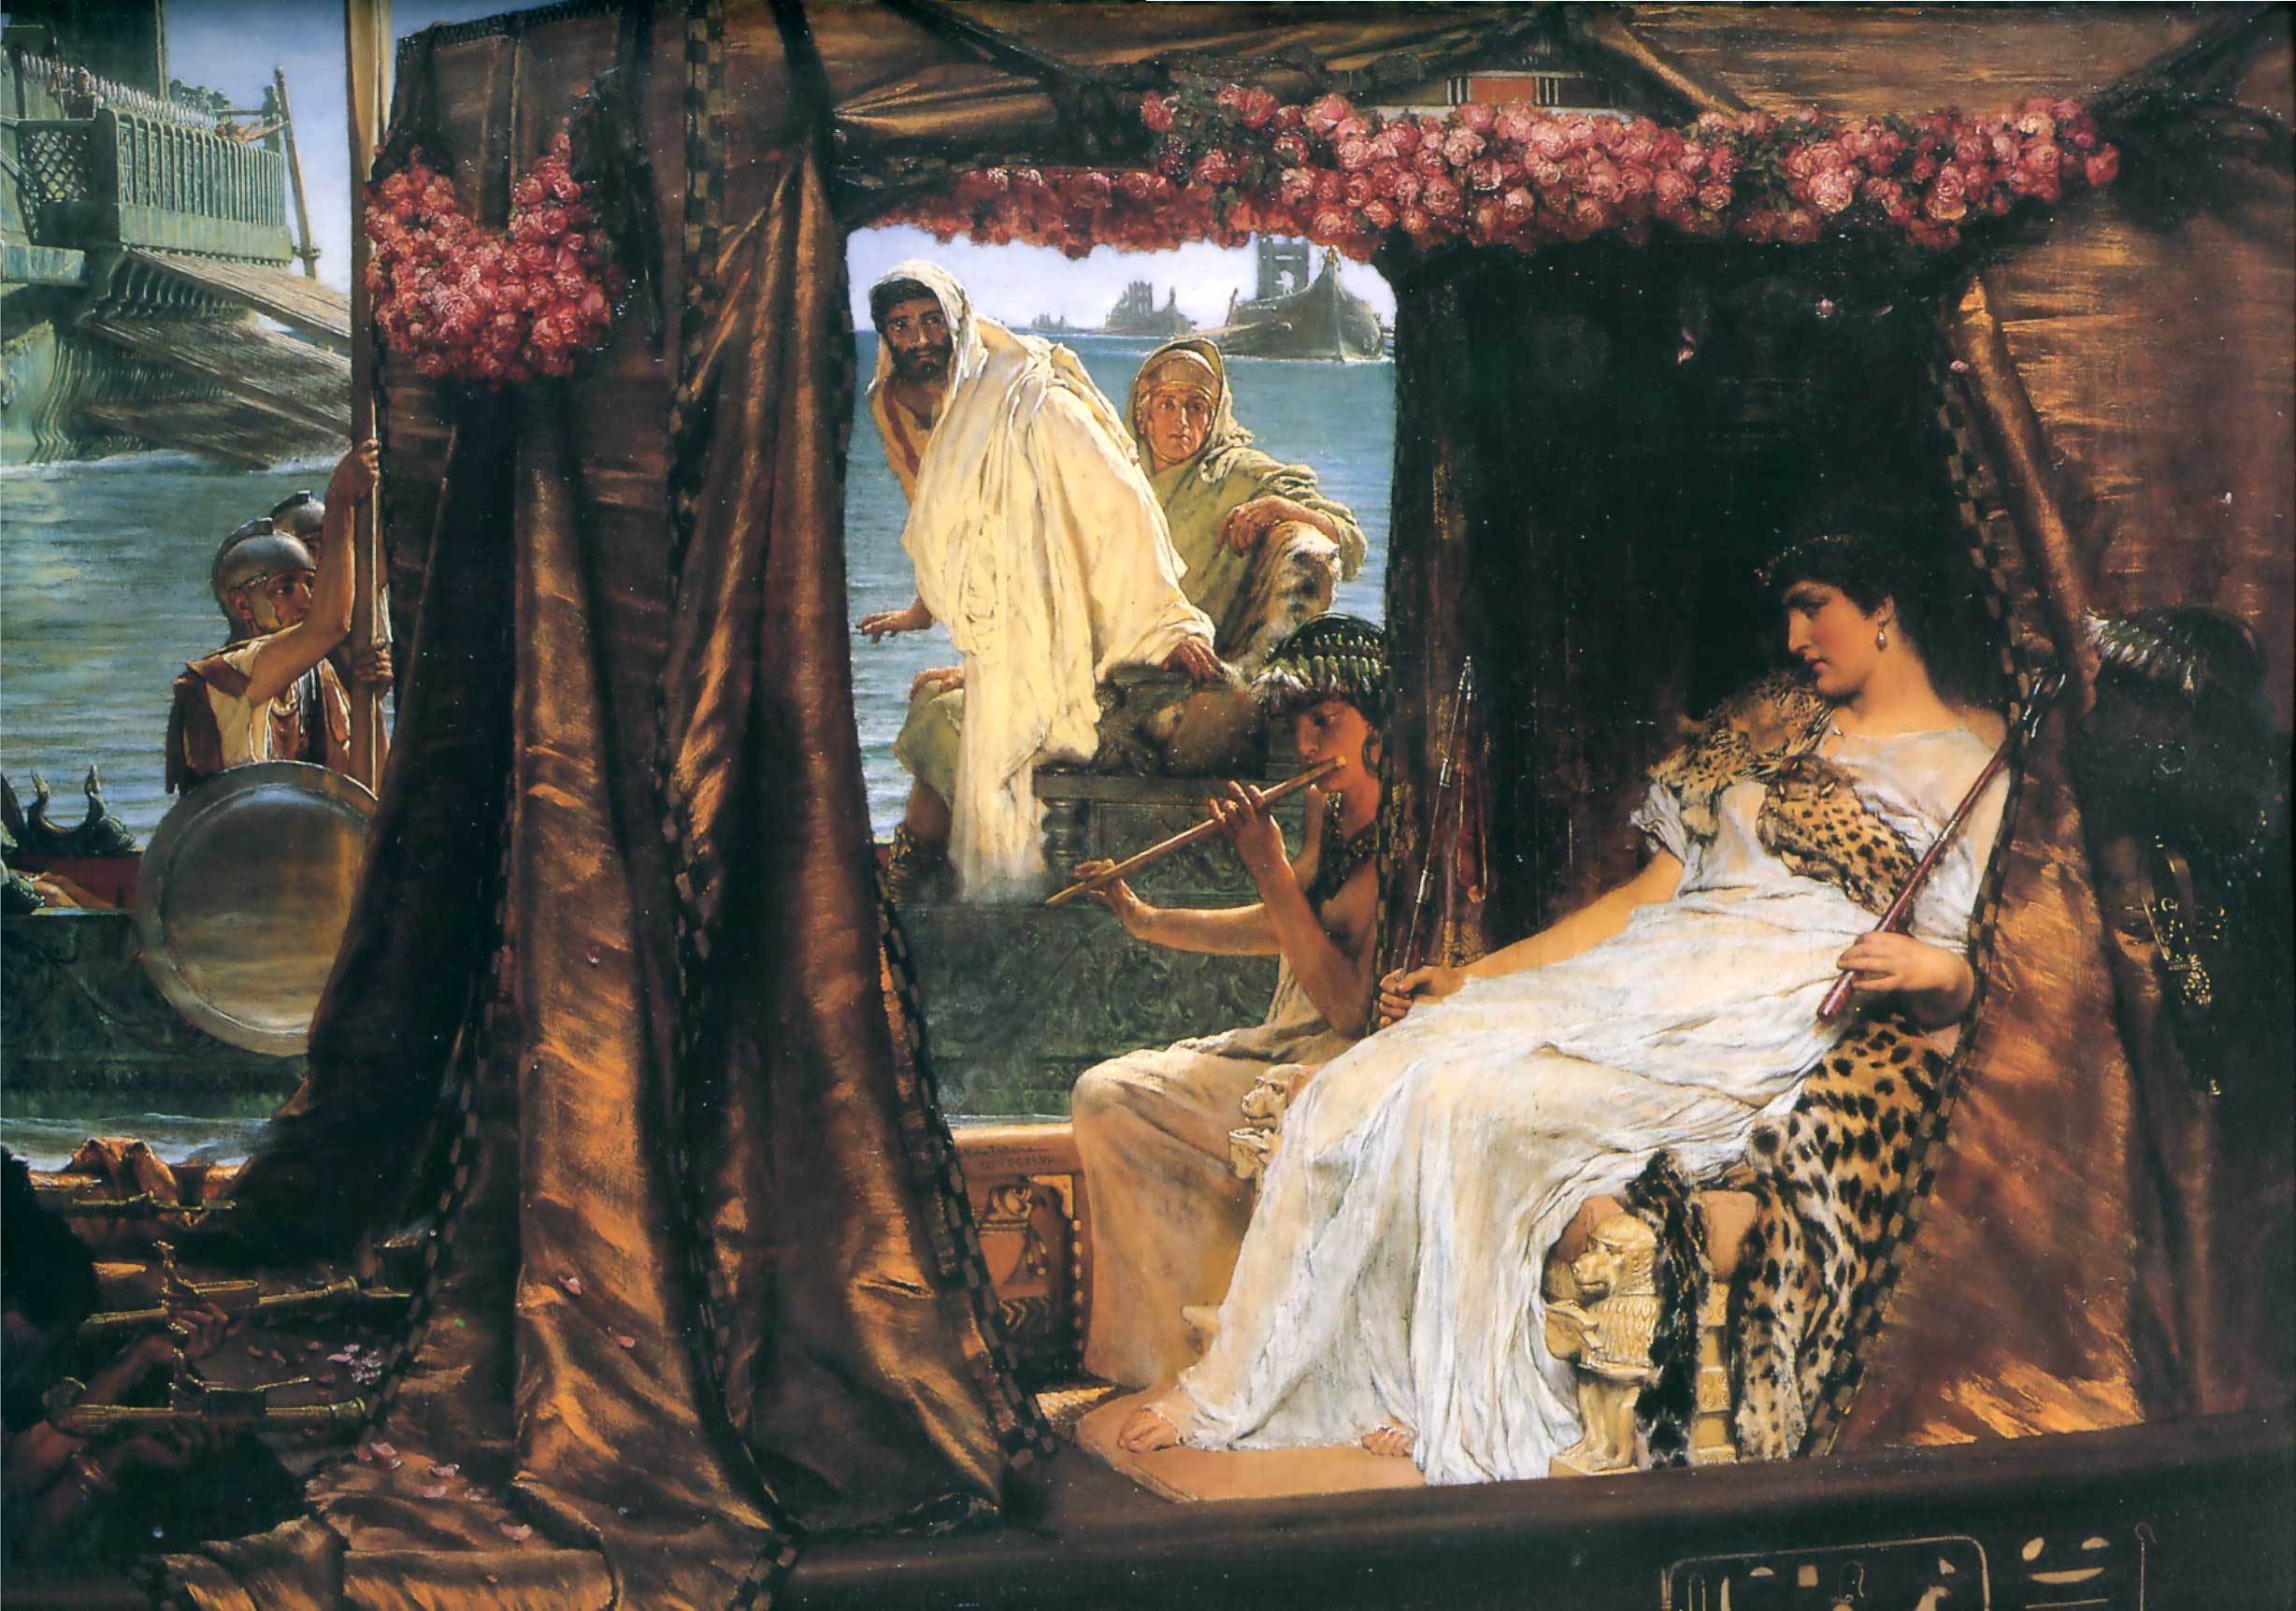 Antony et Cléopâtre by Lawrence Alma-Tadema - 1885 - 65.5 × 92 cm collection privée